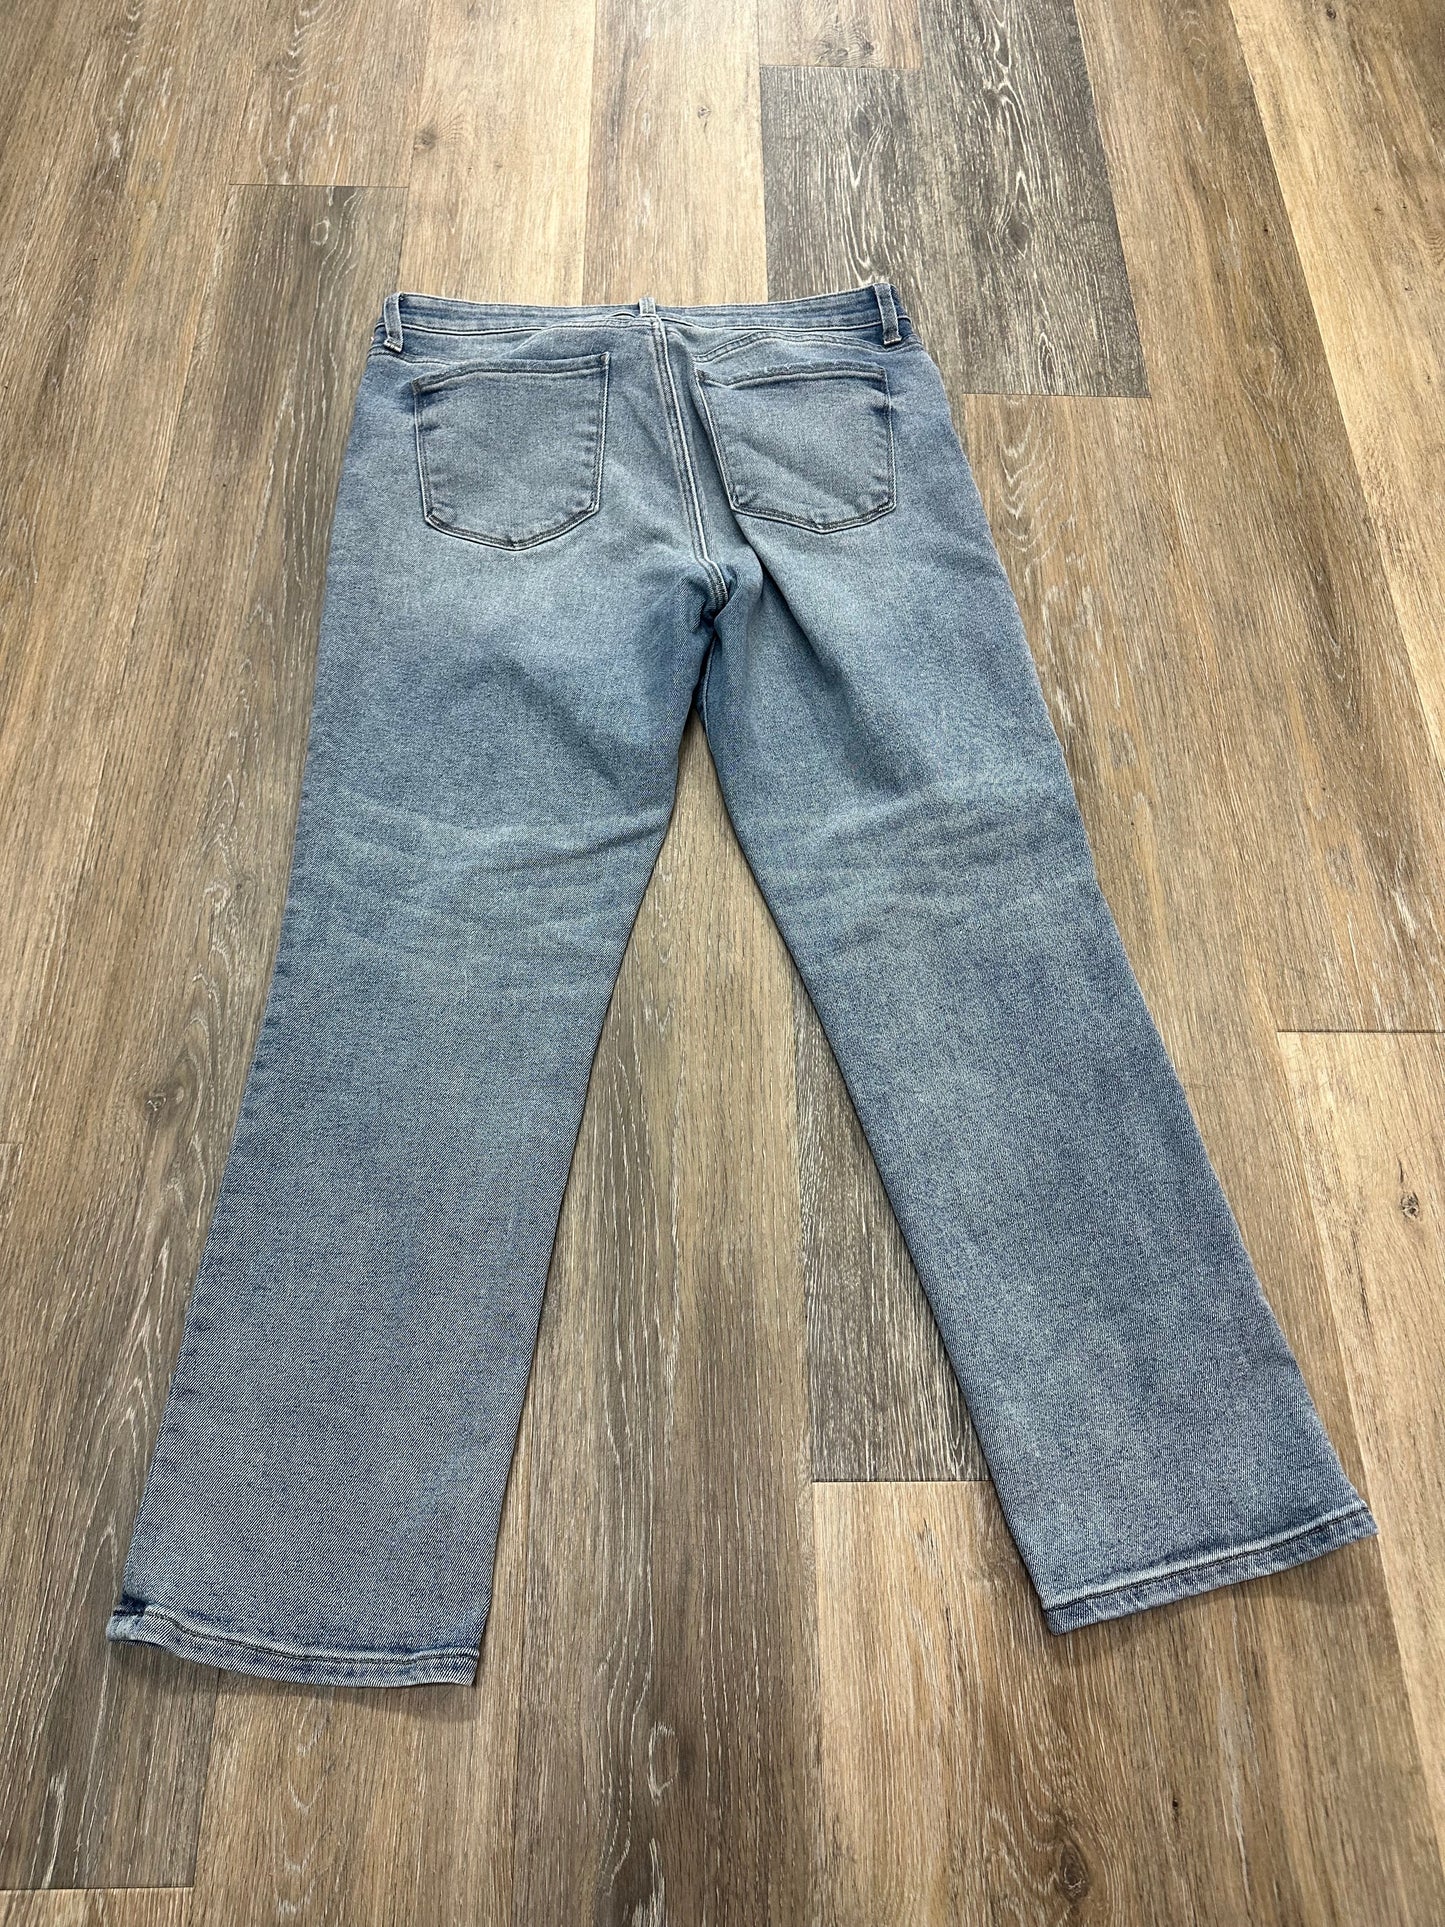 Blue Denim Jeans Straight Evereve, Size 12/31